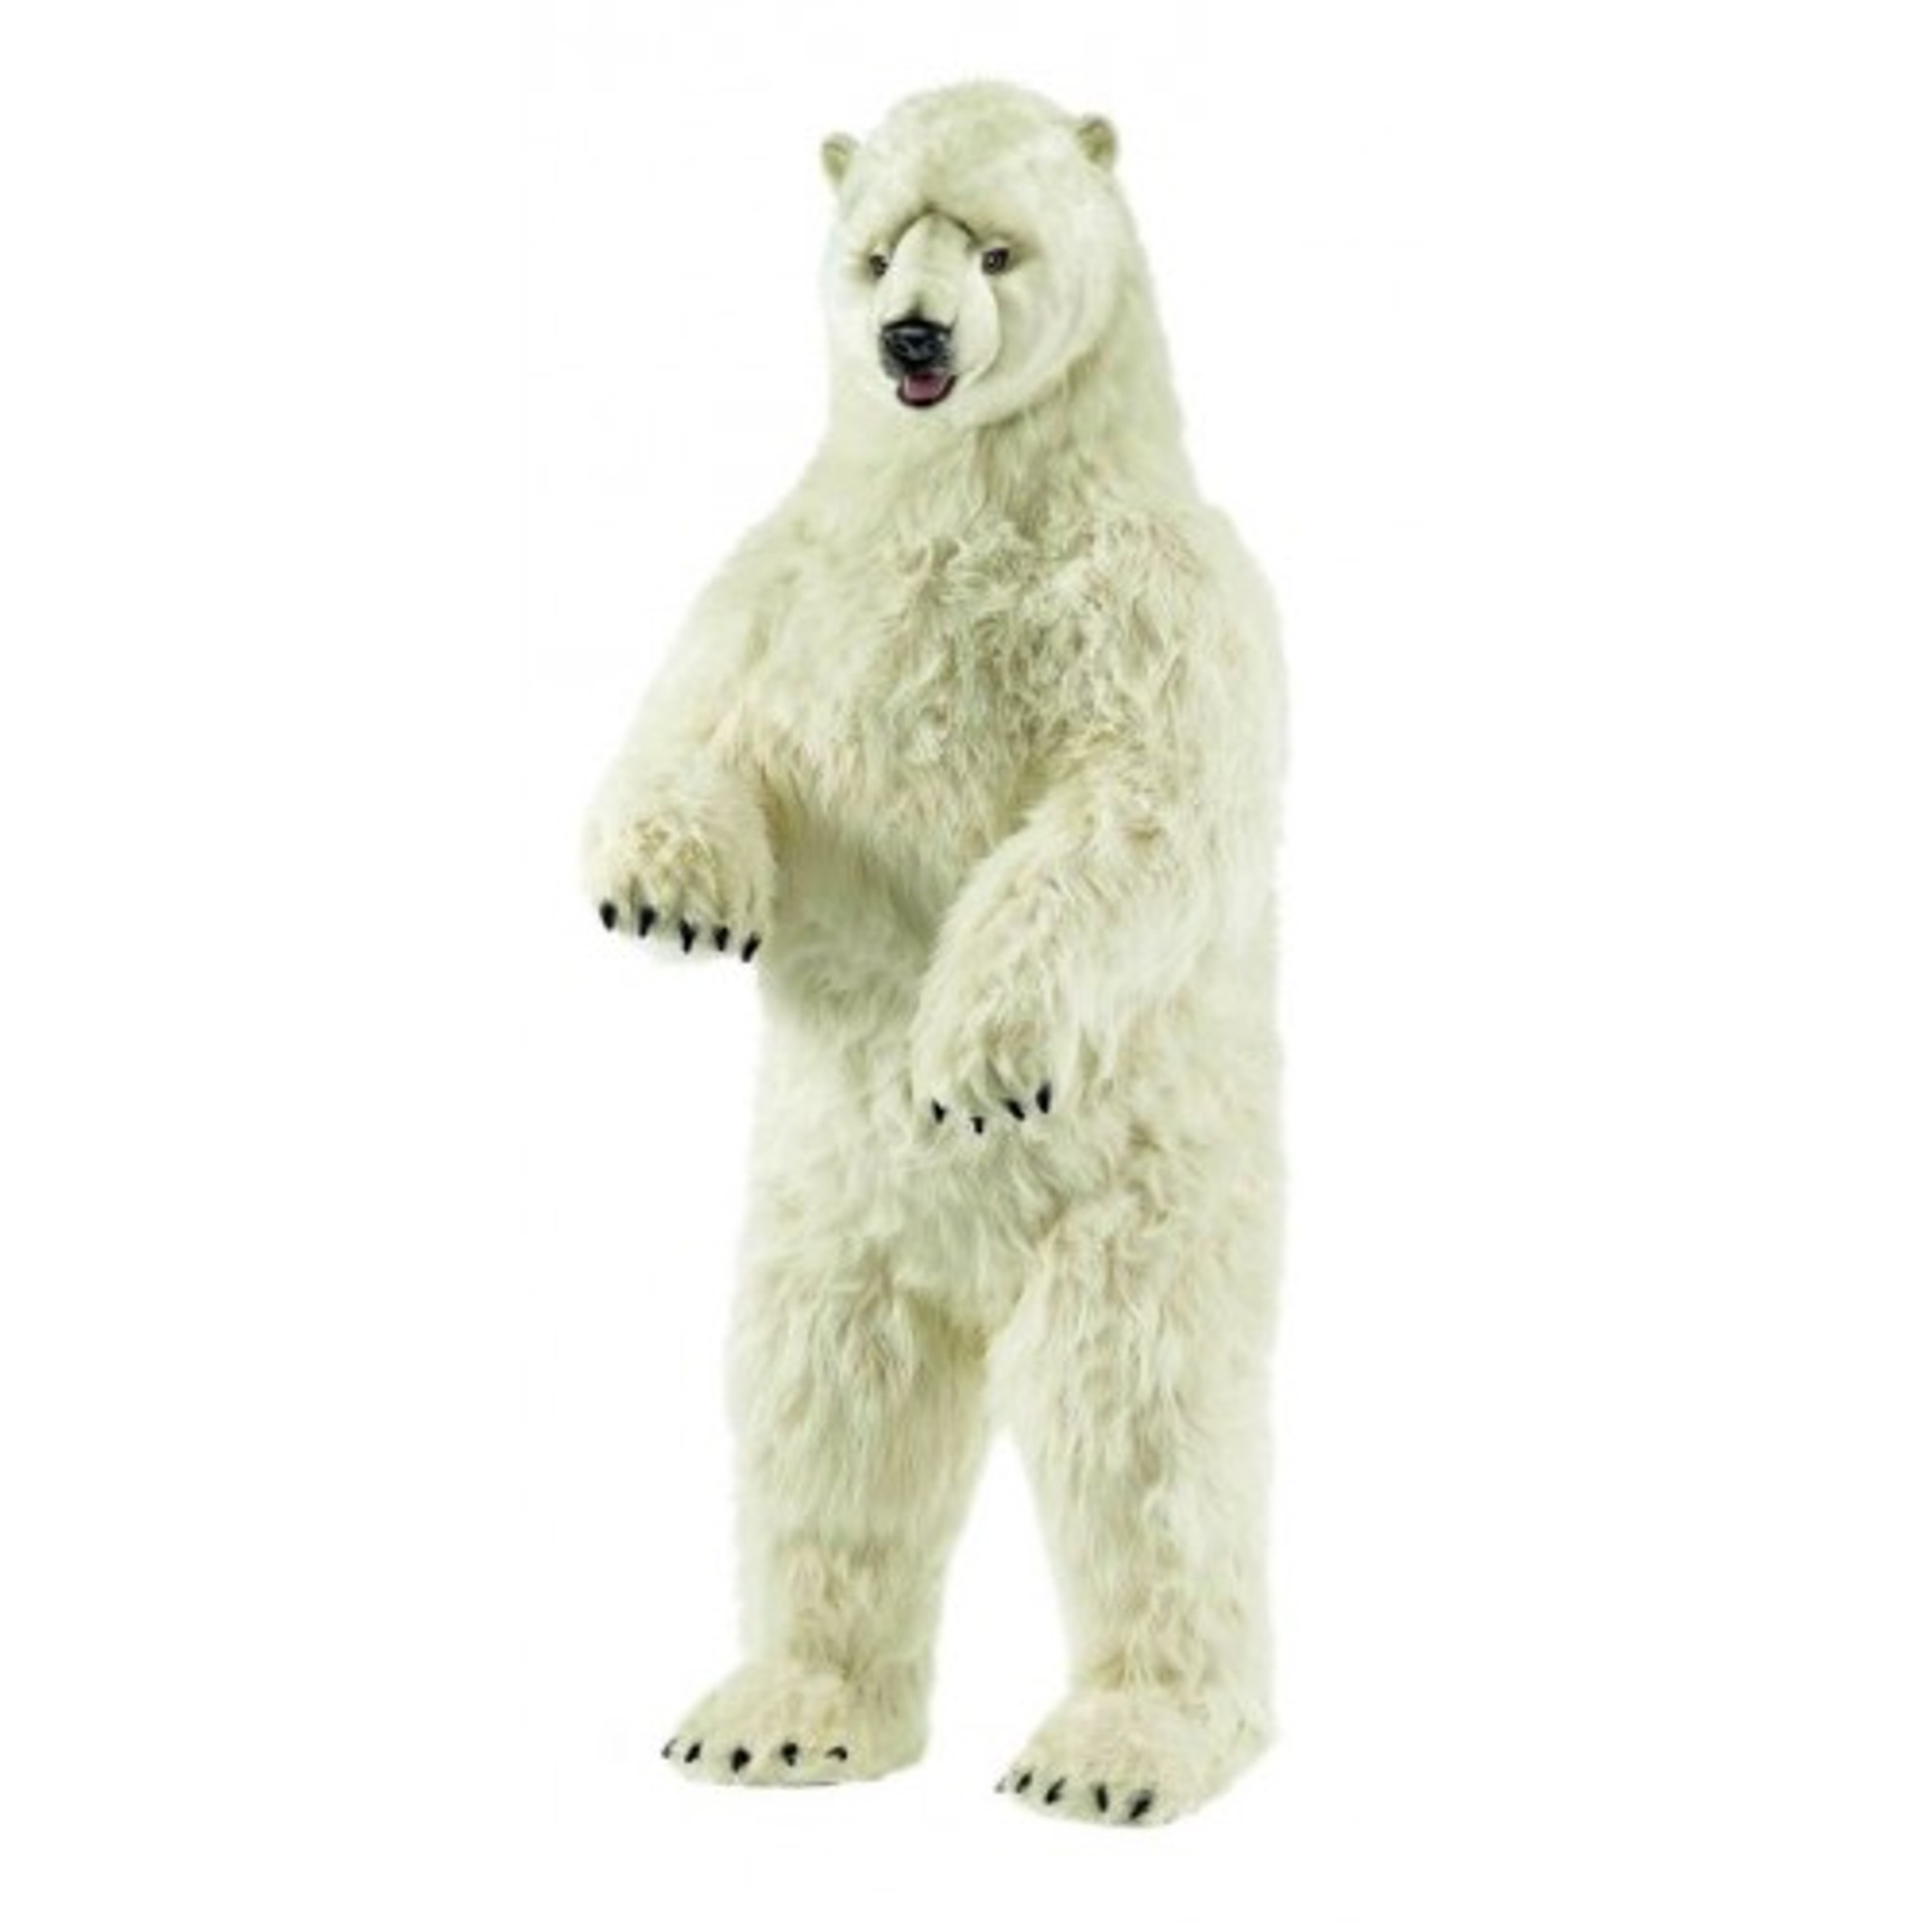 Is adding the Polar Bear Realistic? 